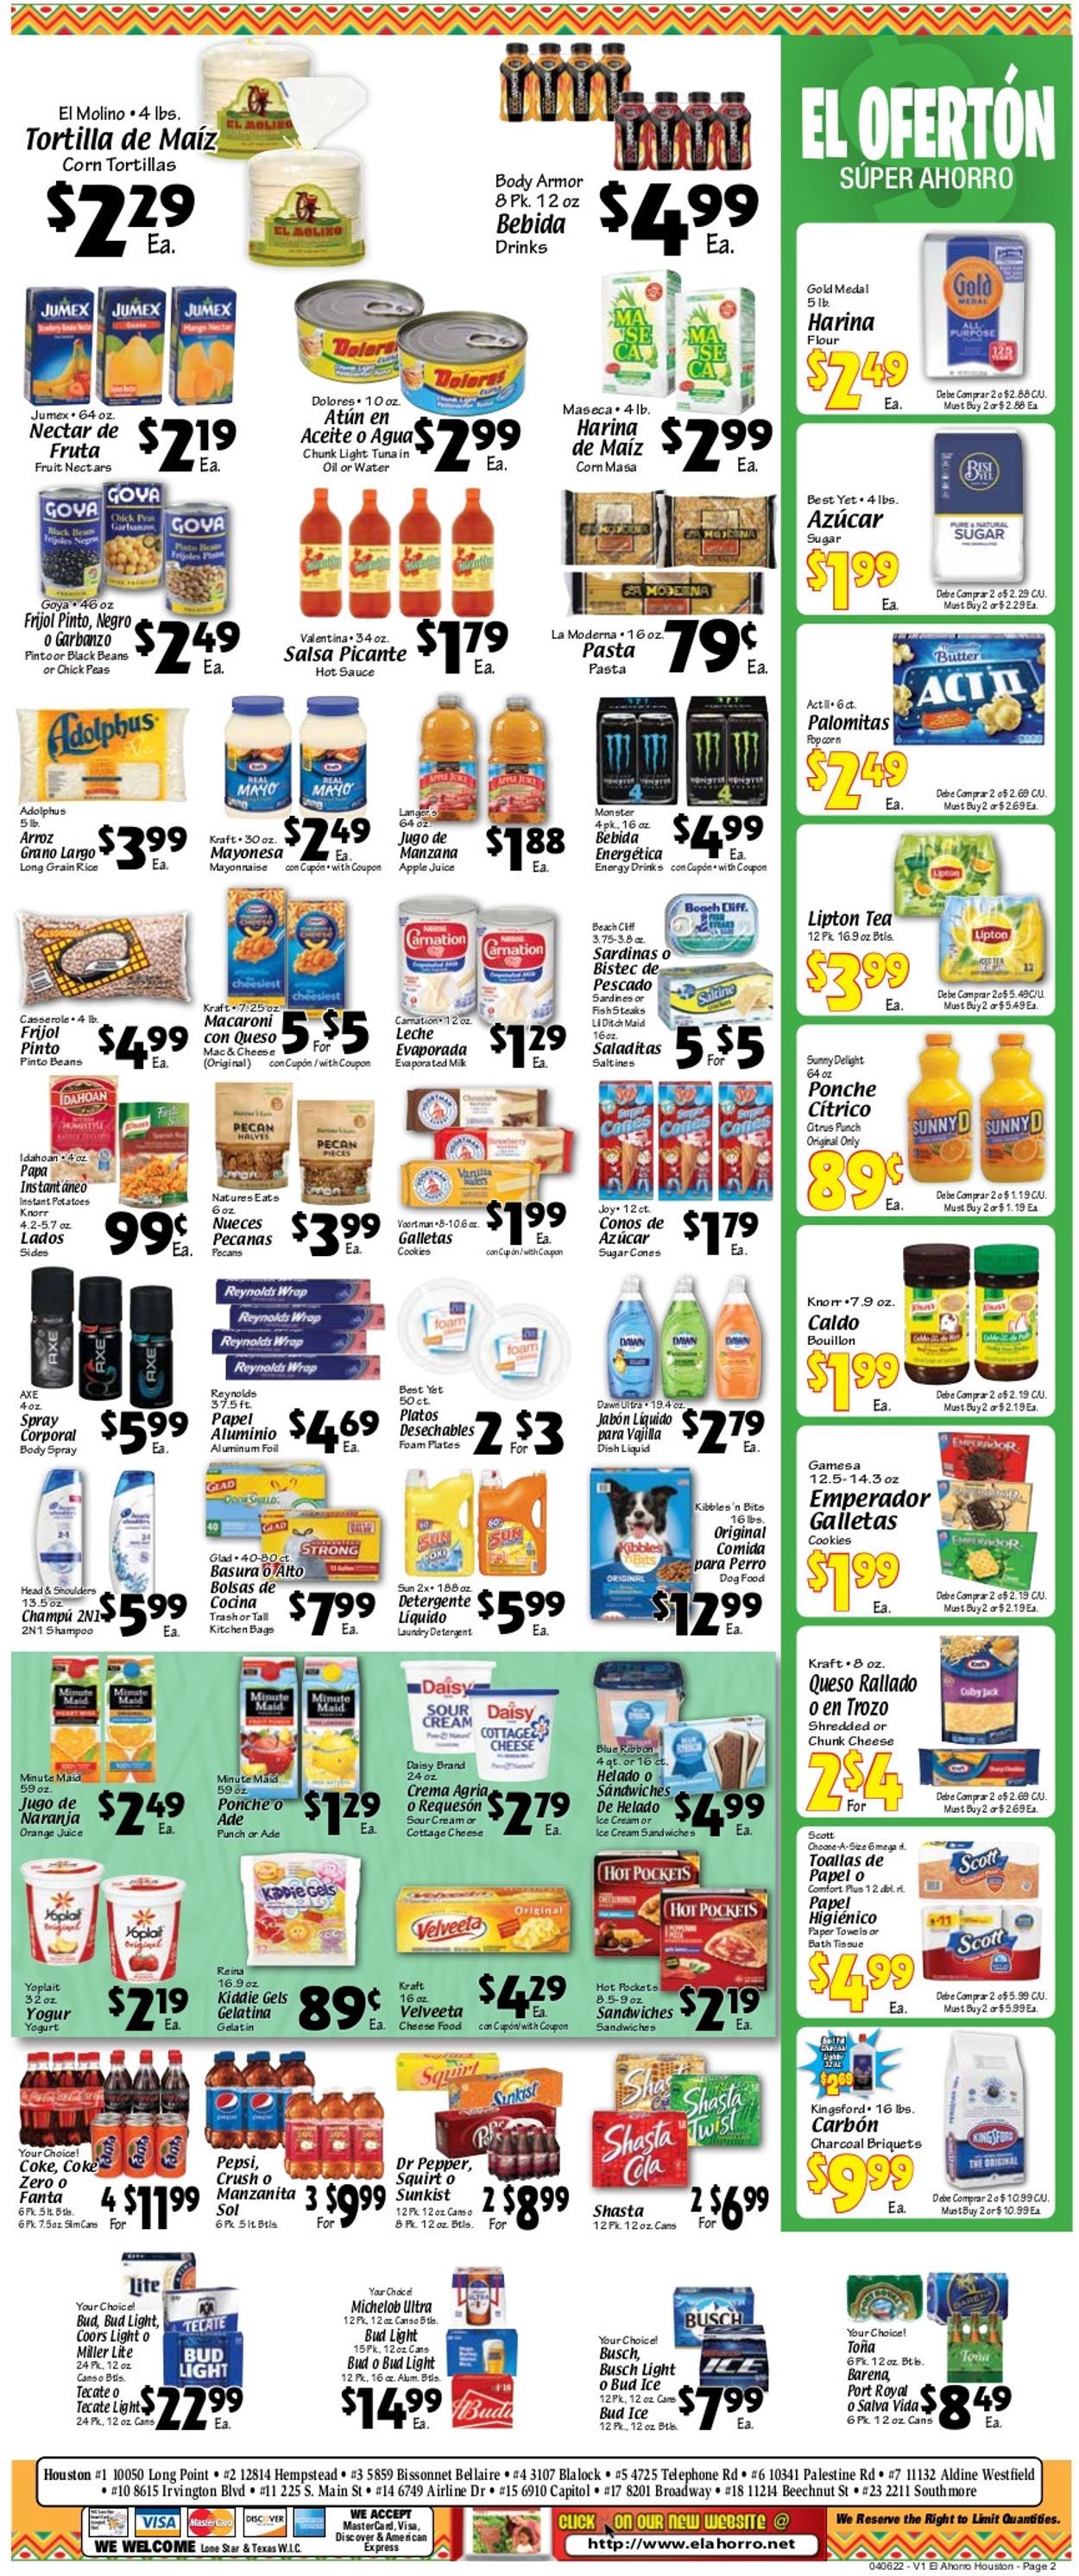 Catalogue El Ahorro Supermarket from 04/06/2022